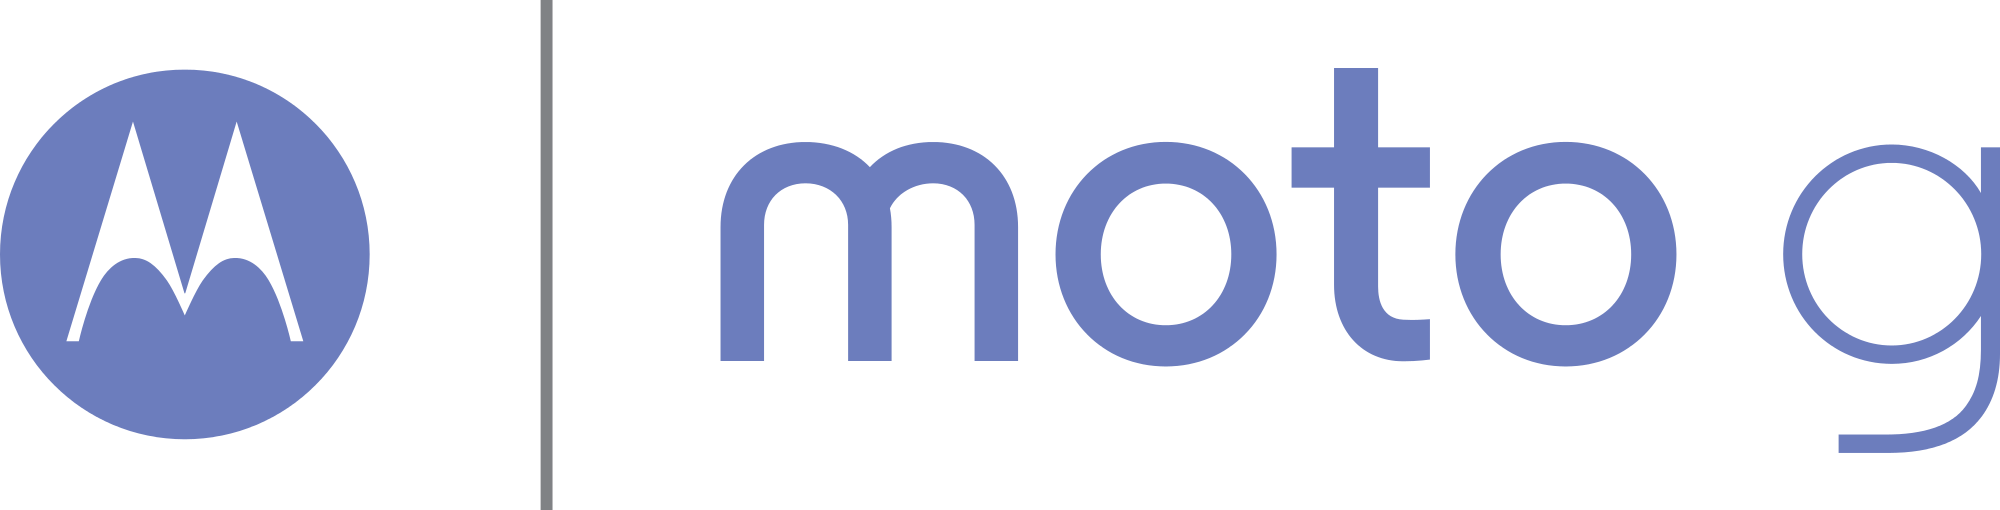 Moto Logo - Moto G logo.svg